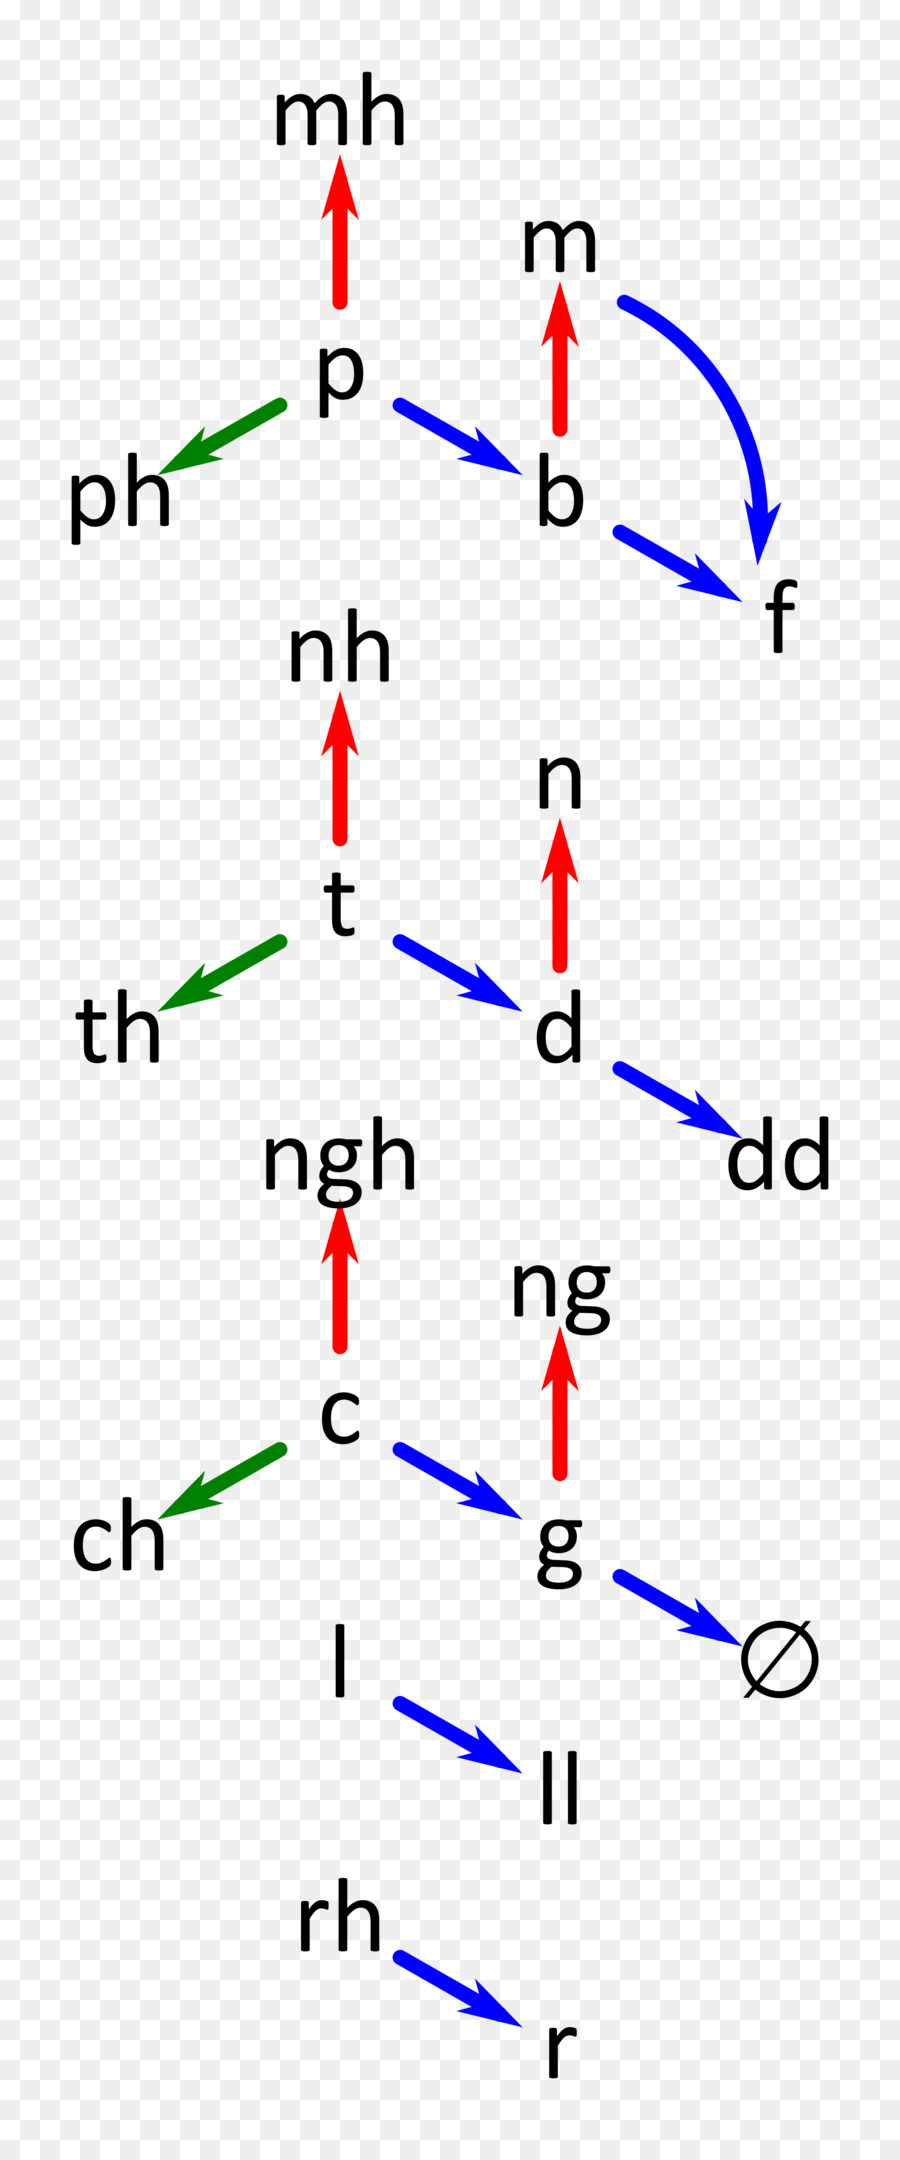 Consonant Mutation Text